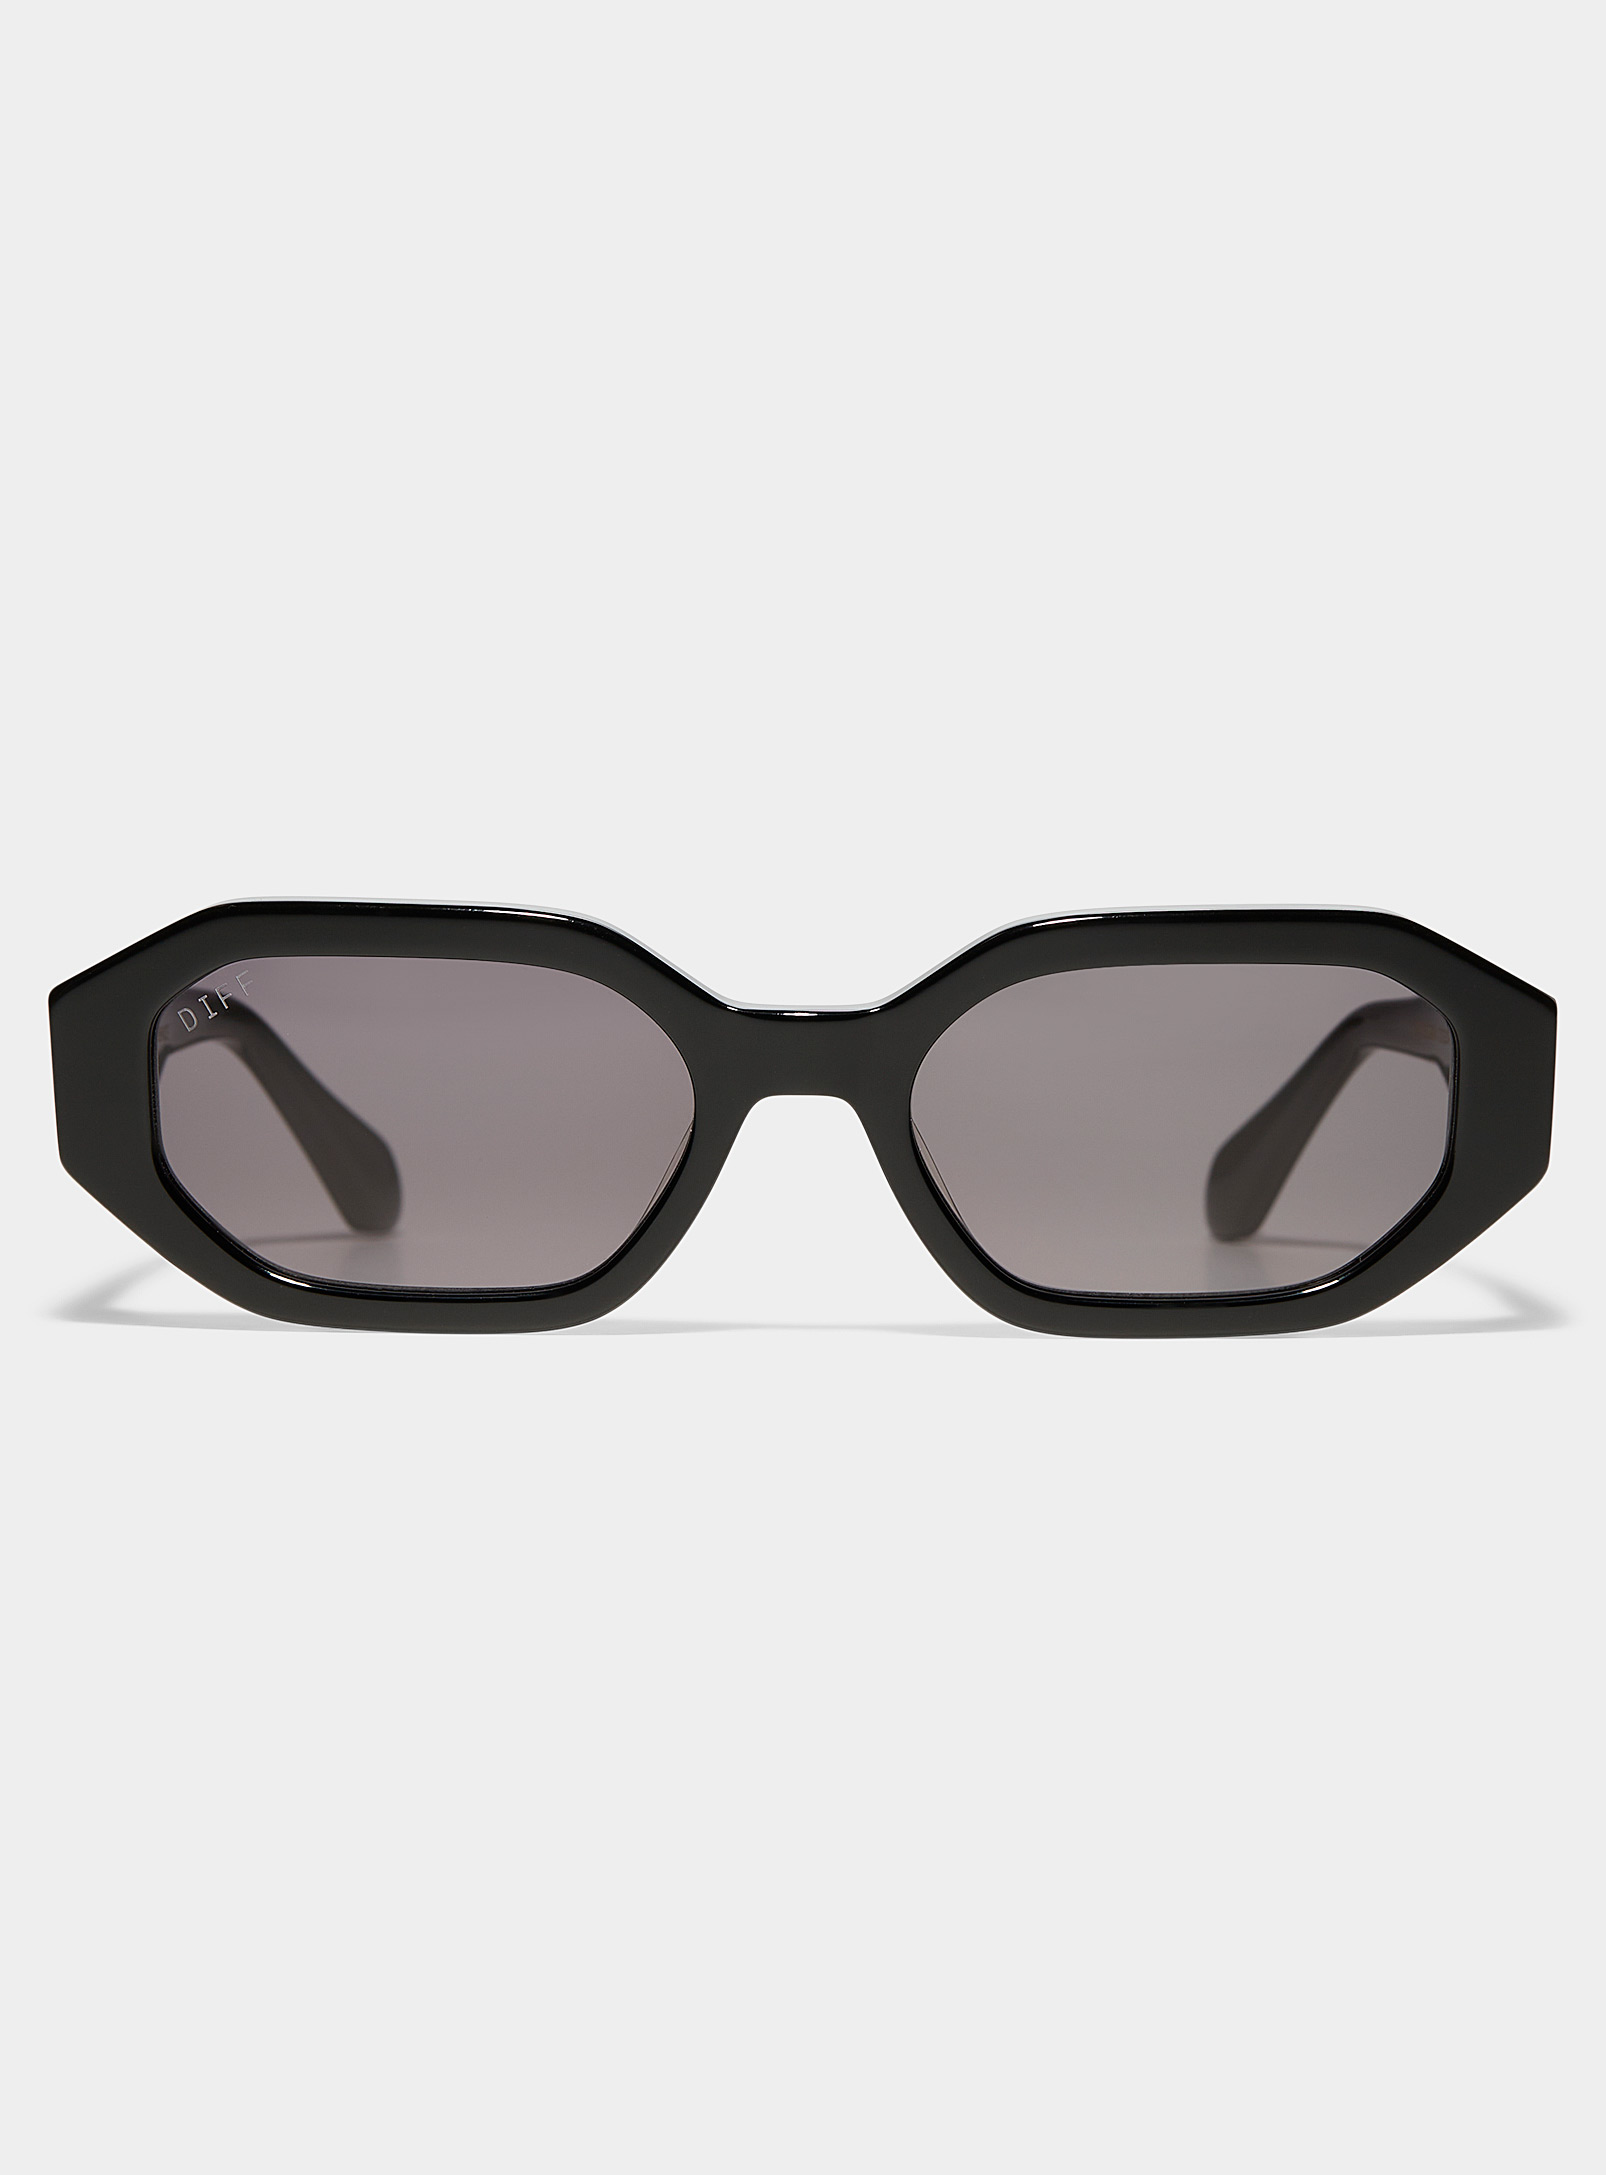 Diff Allegra Angular Sunglasses In Black